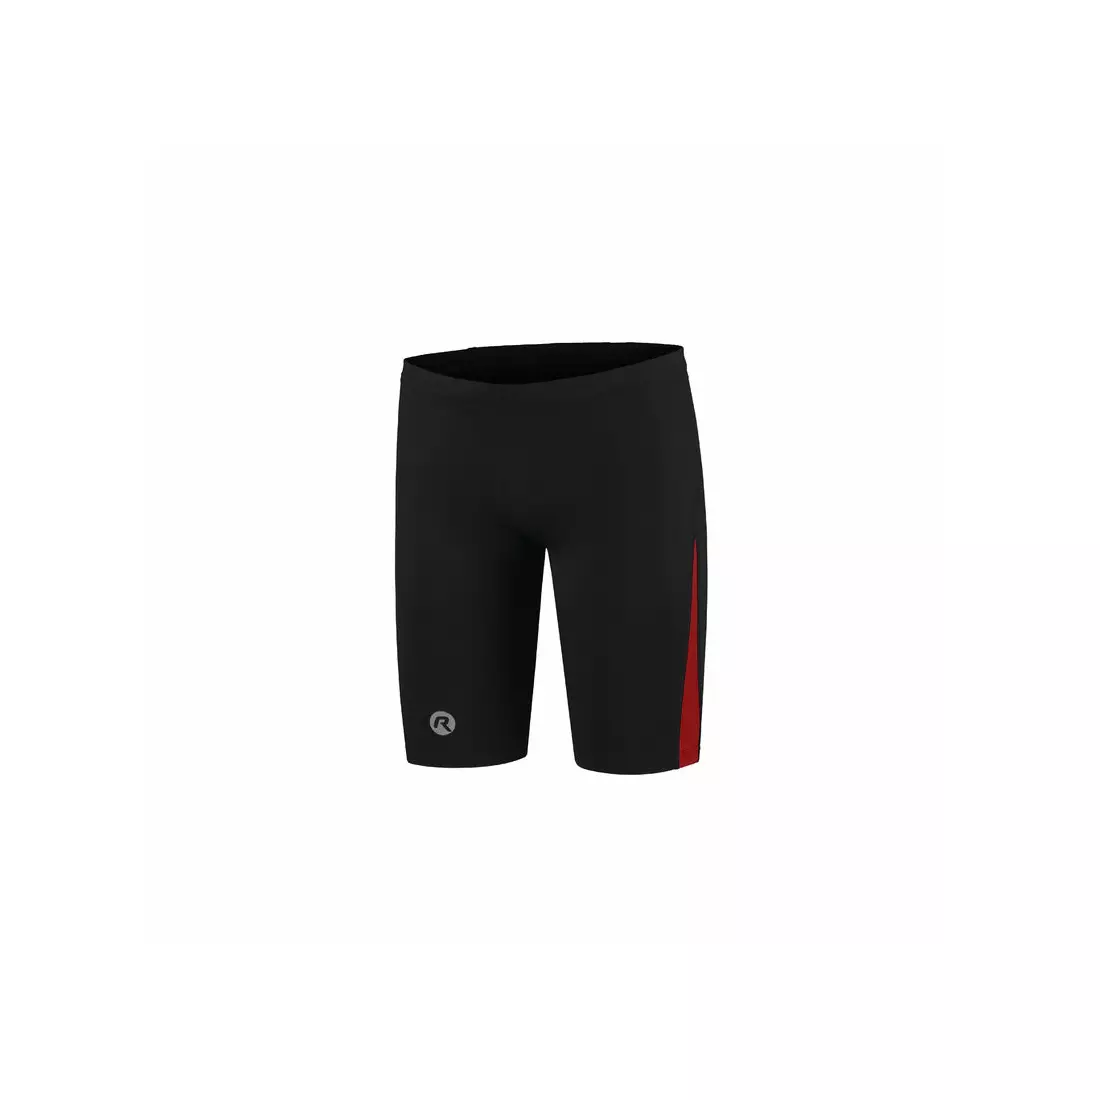 ROGELLI  RUN DIXON - men's sports shorts, black and red